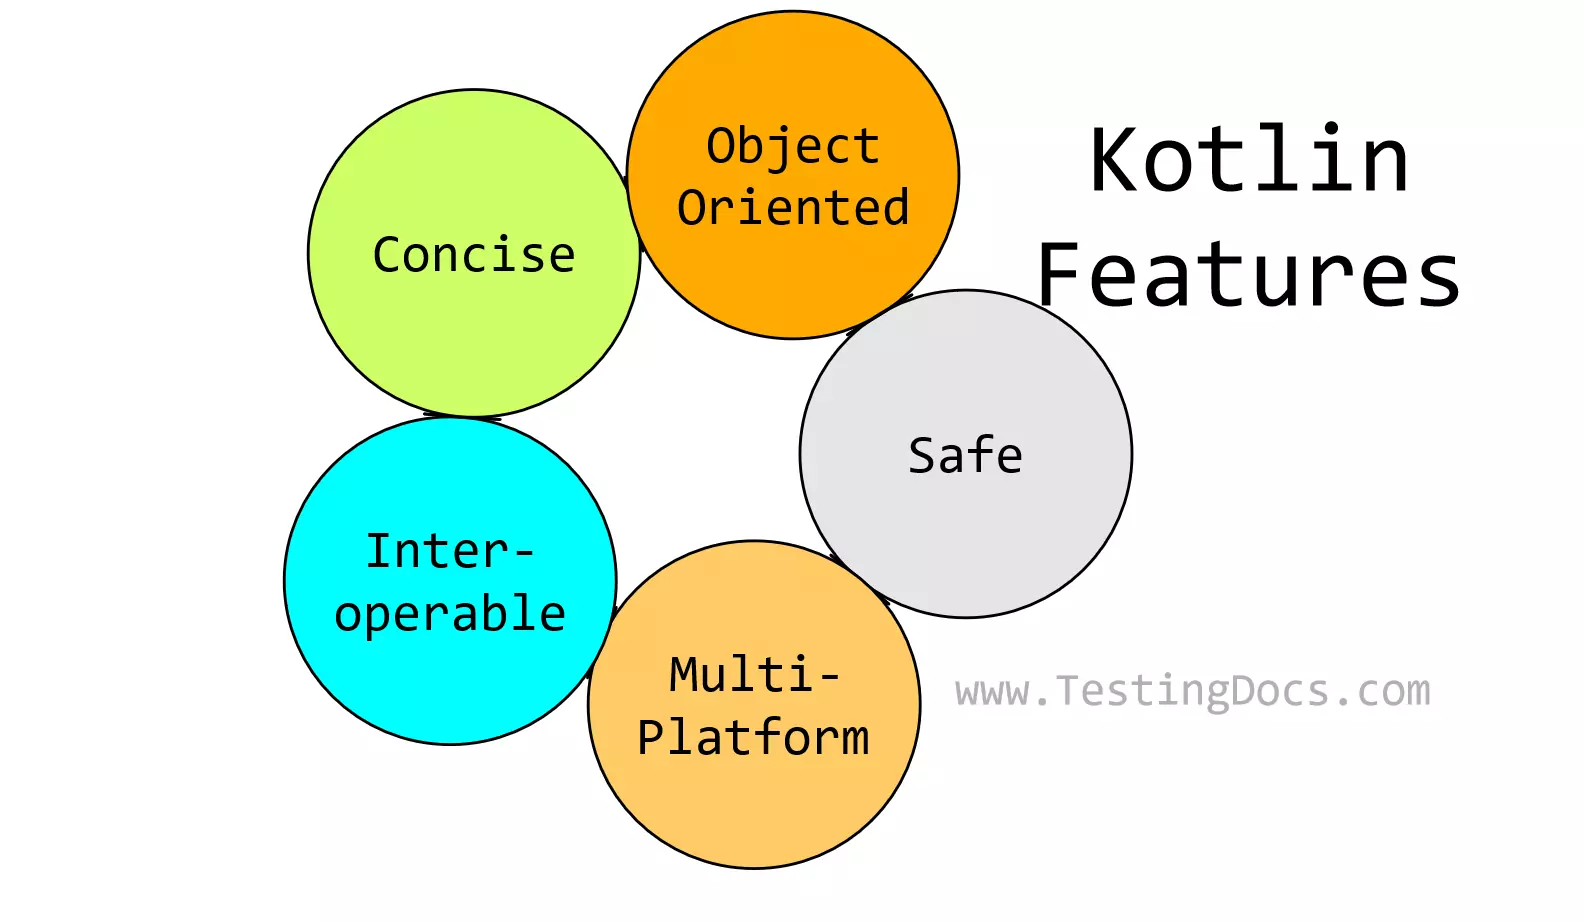 Kotlin Features